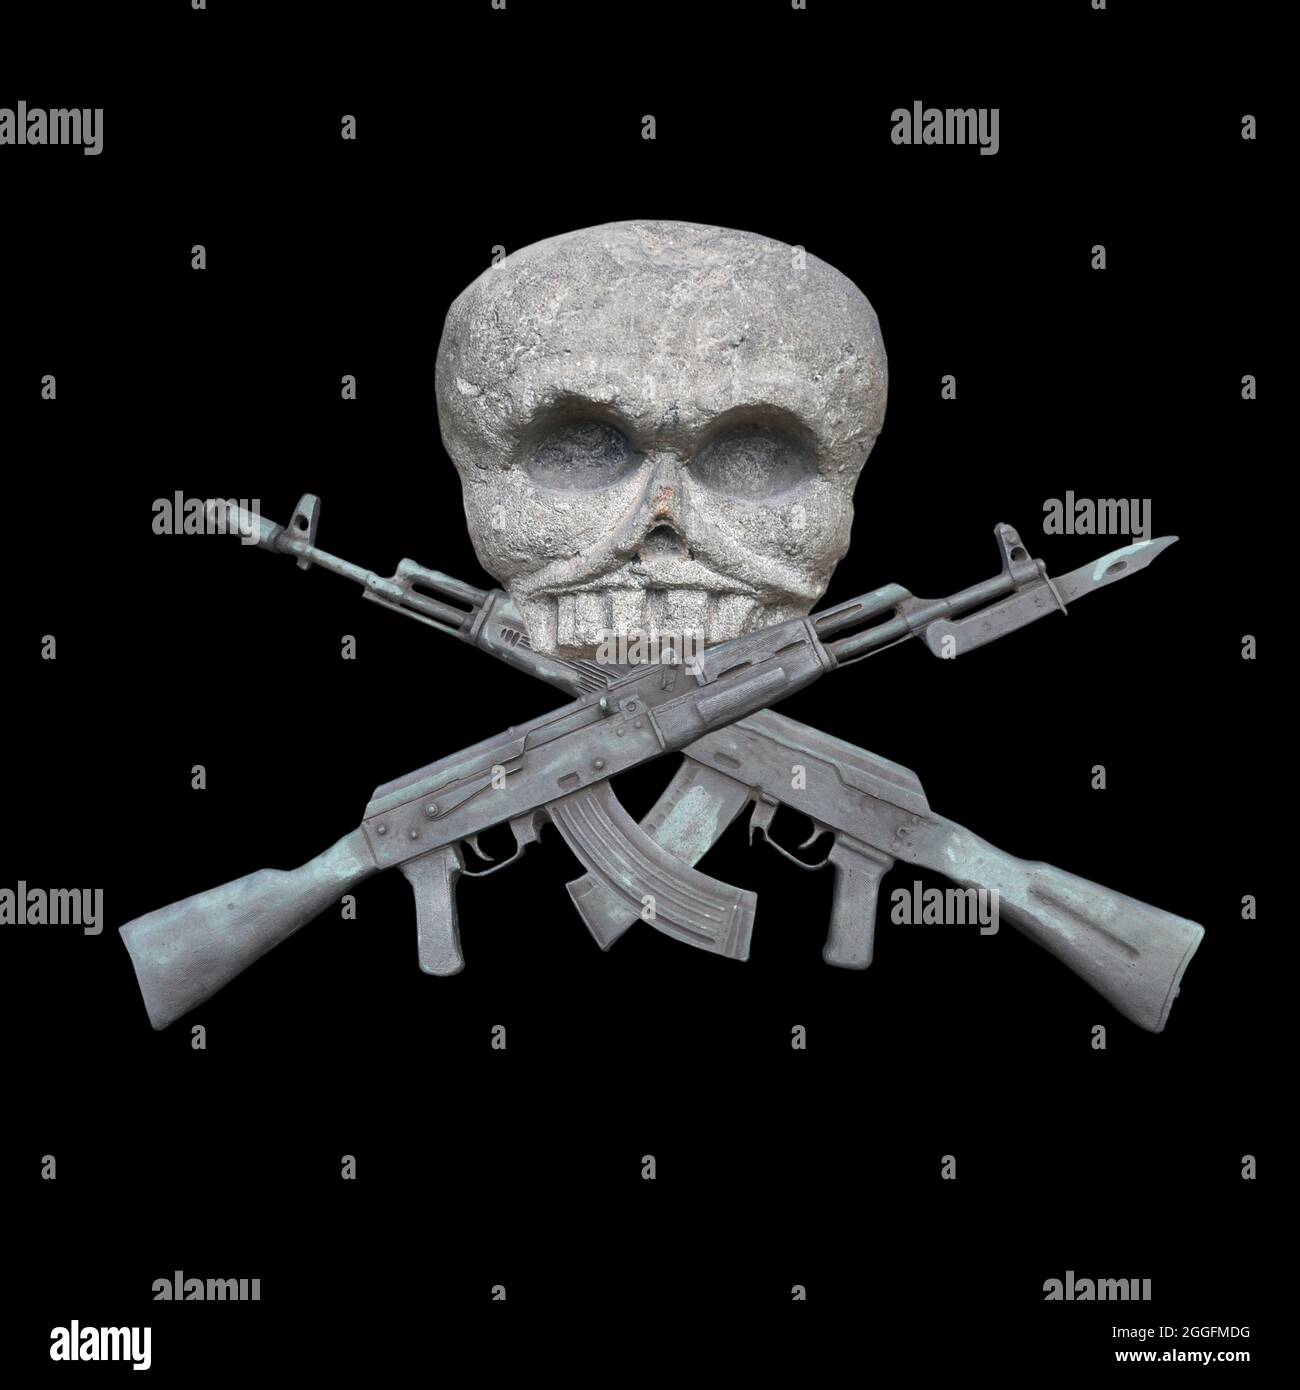 View of the skull with crossed Kalashnikovs. Isolated on dark background Stock Photo